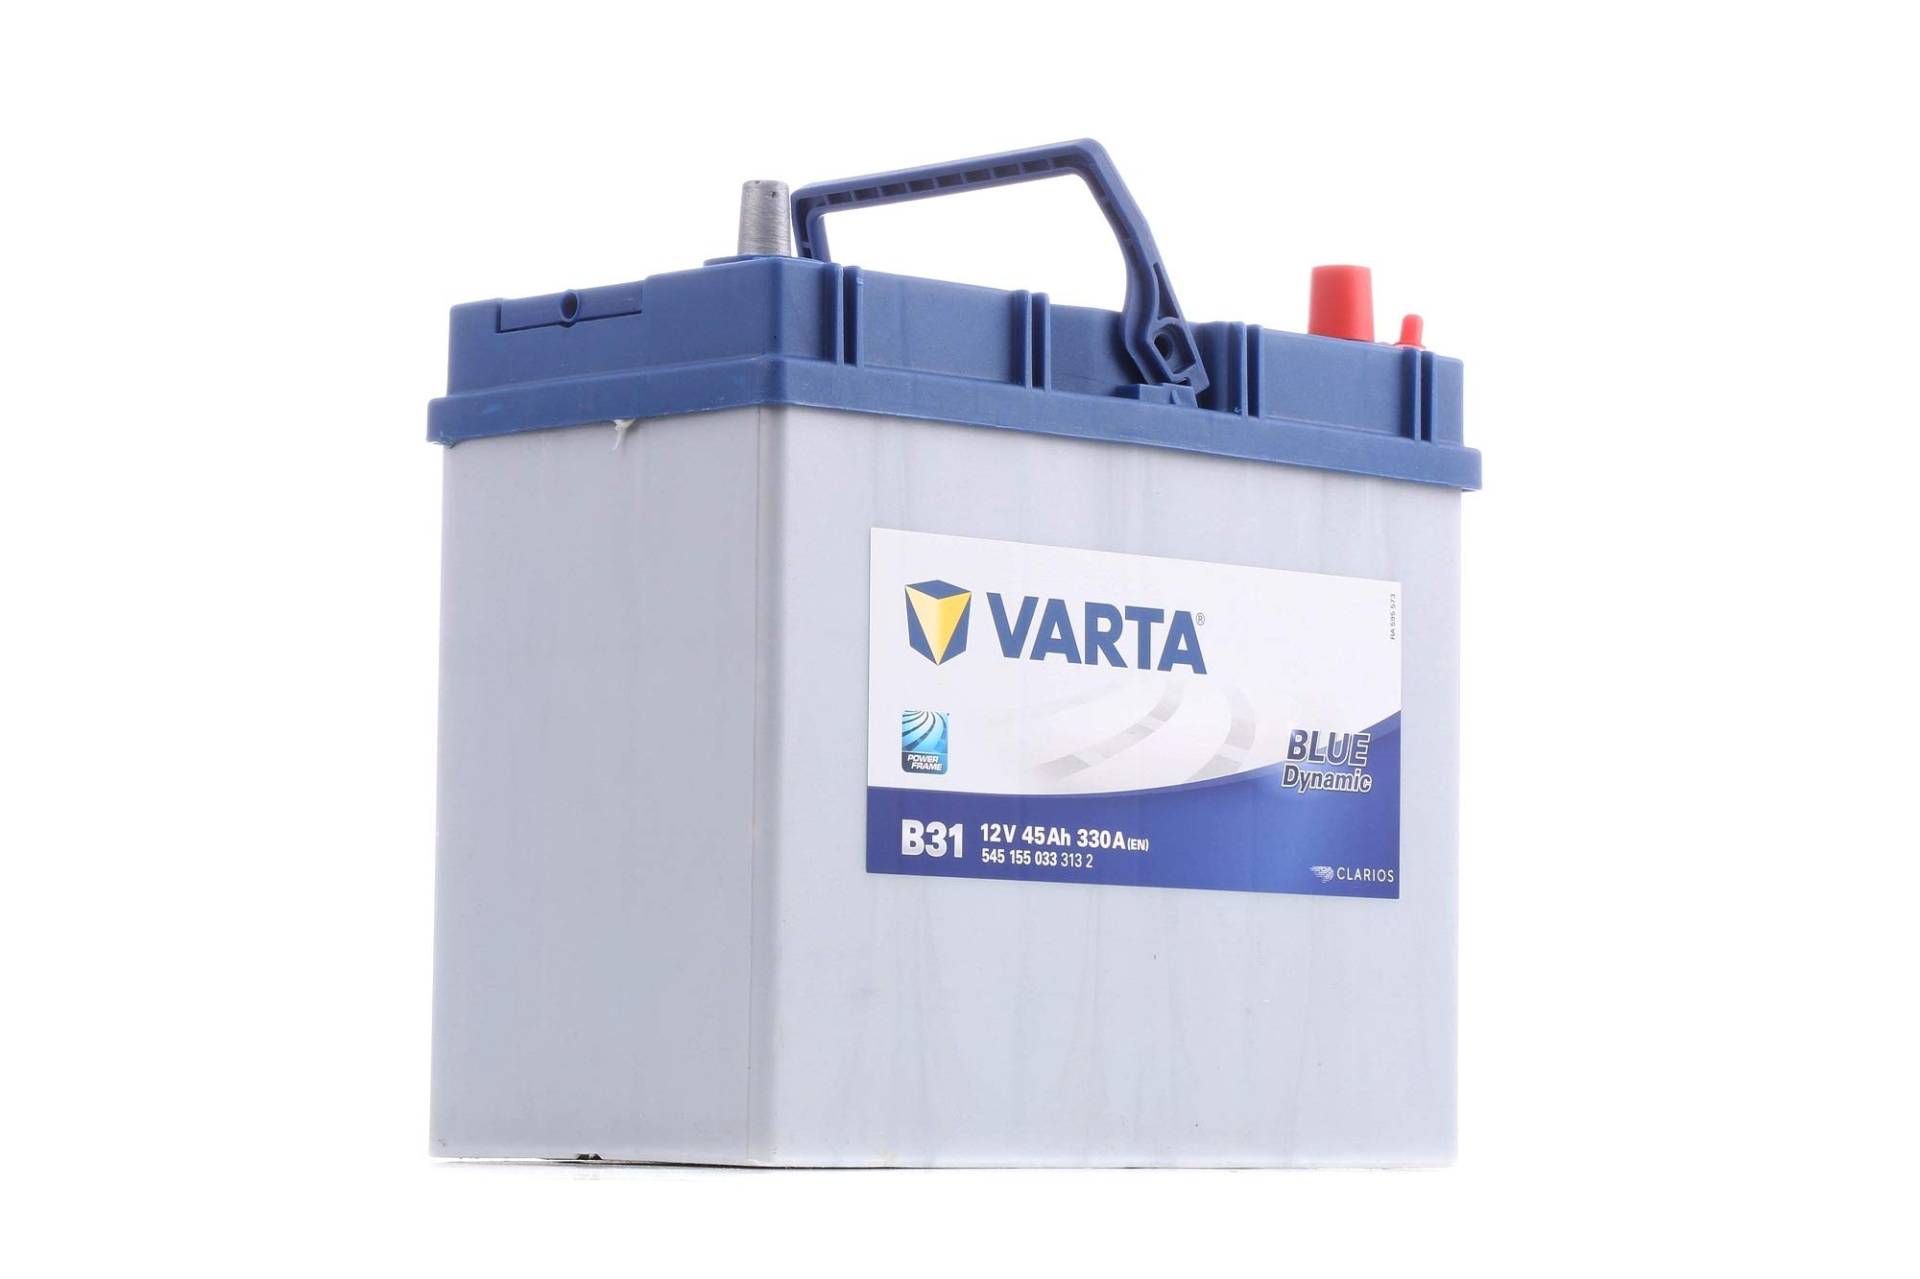 Varta 5451550333132 Autobatterien Blue Dynamic B31 12 V 45 mAh 330 A von Varta